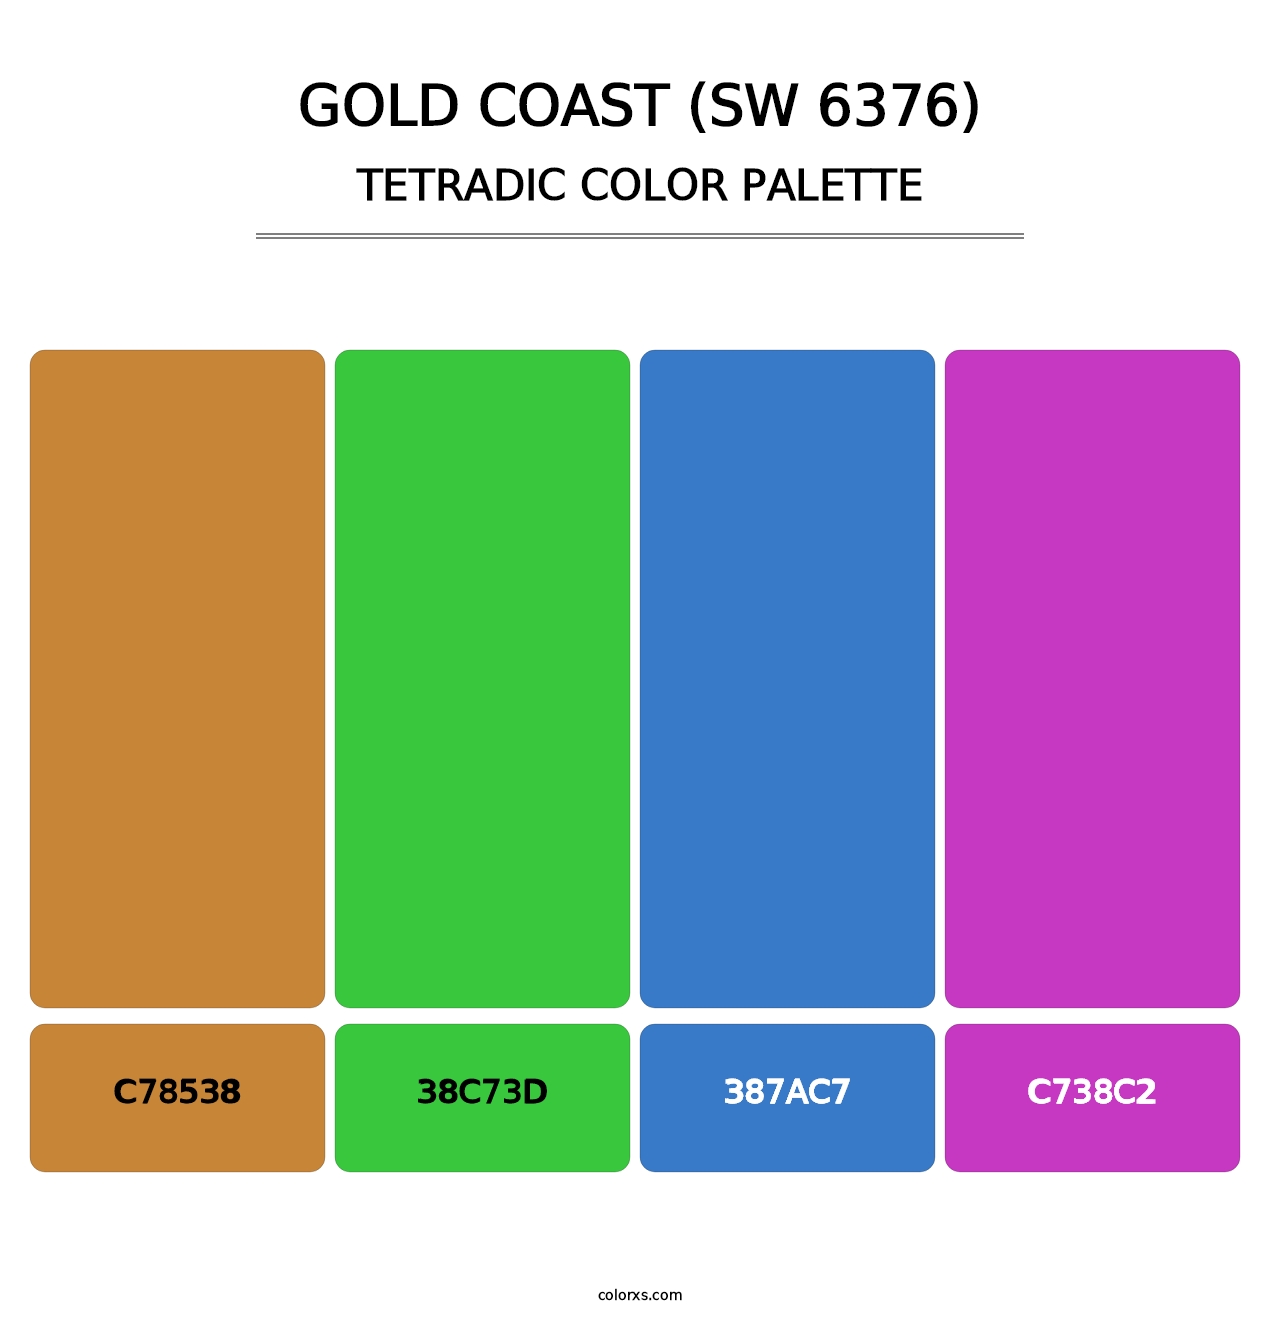 Gold Coast (SW 6376) - Tetradic Color Palette